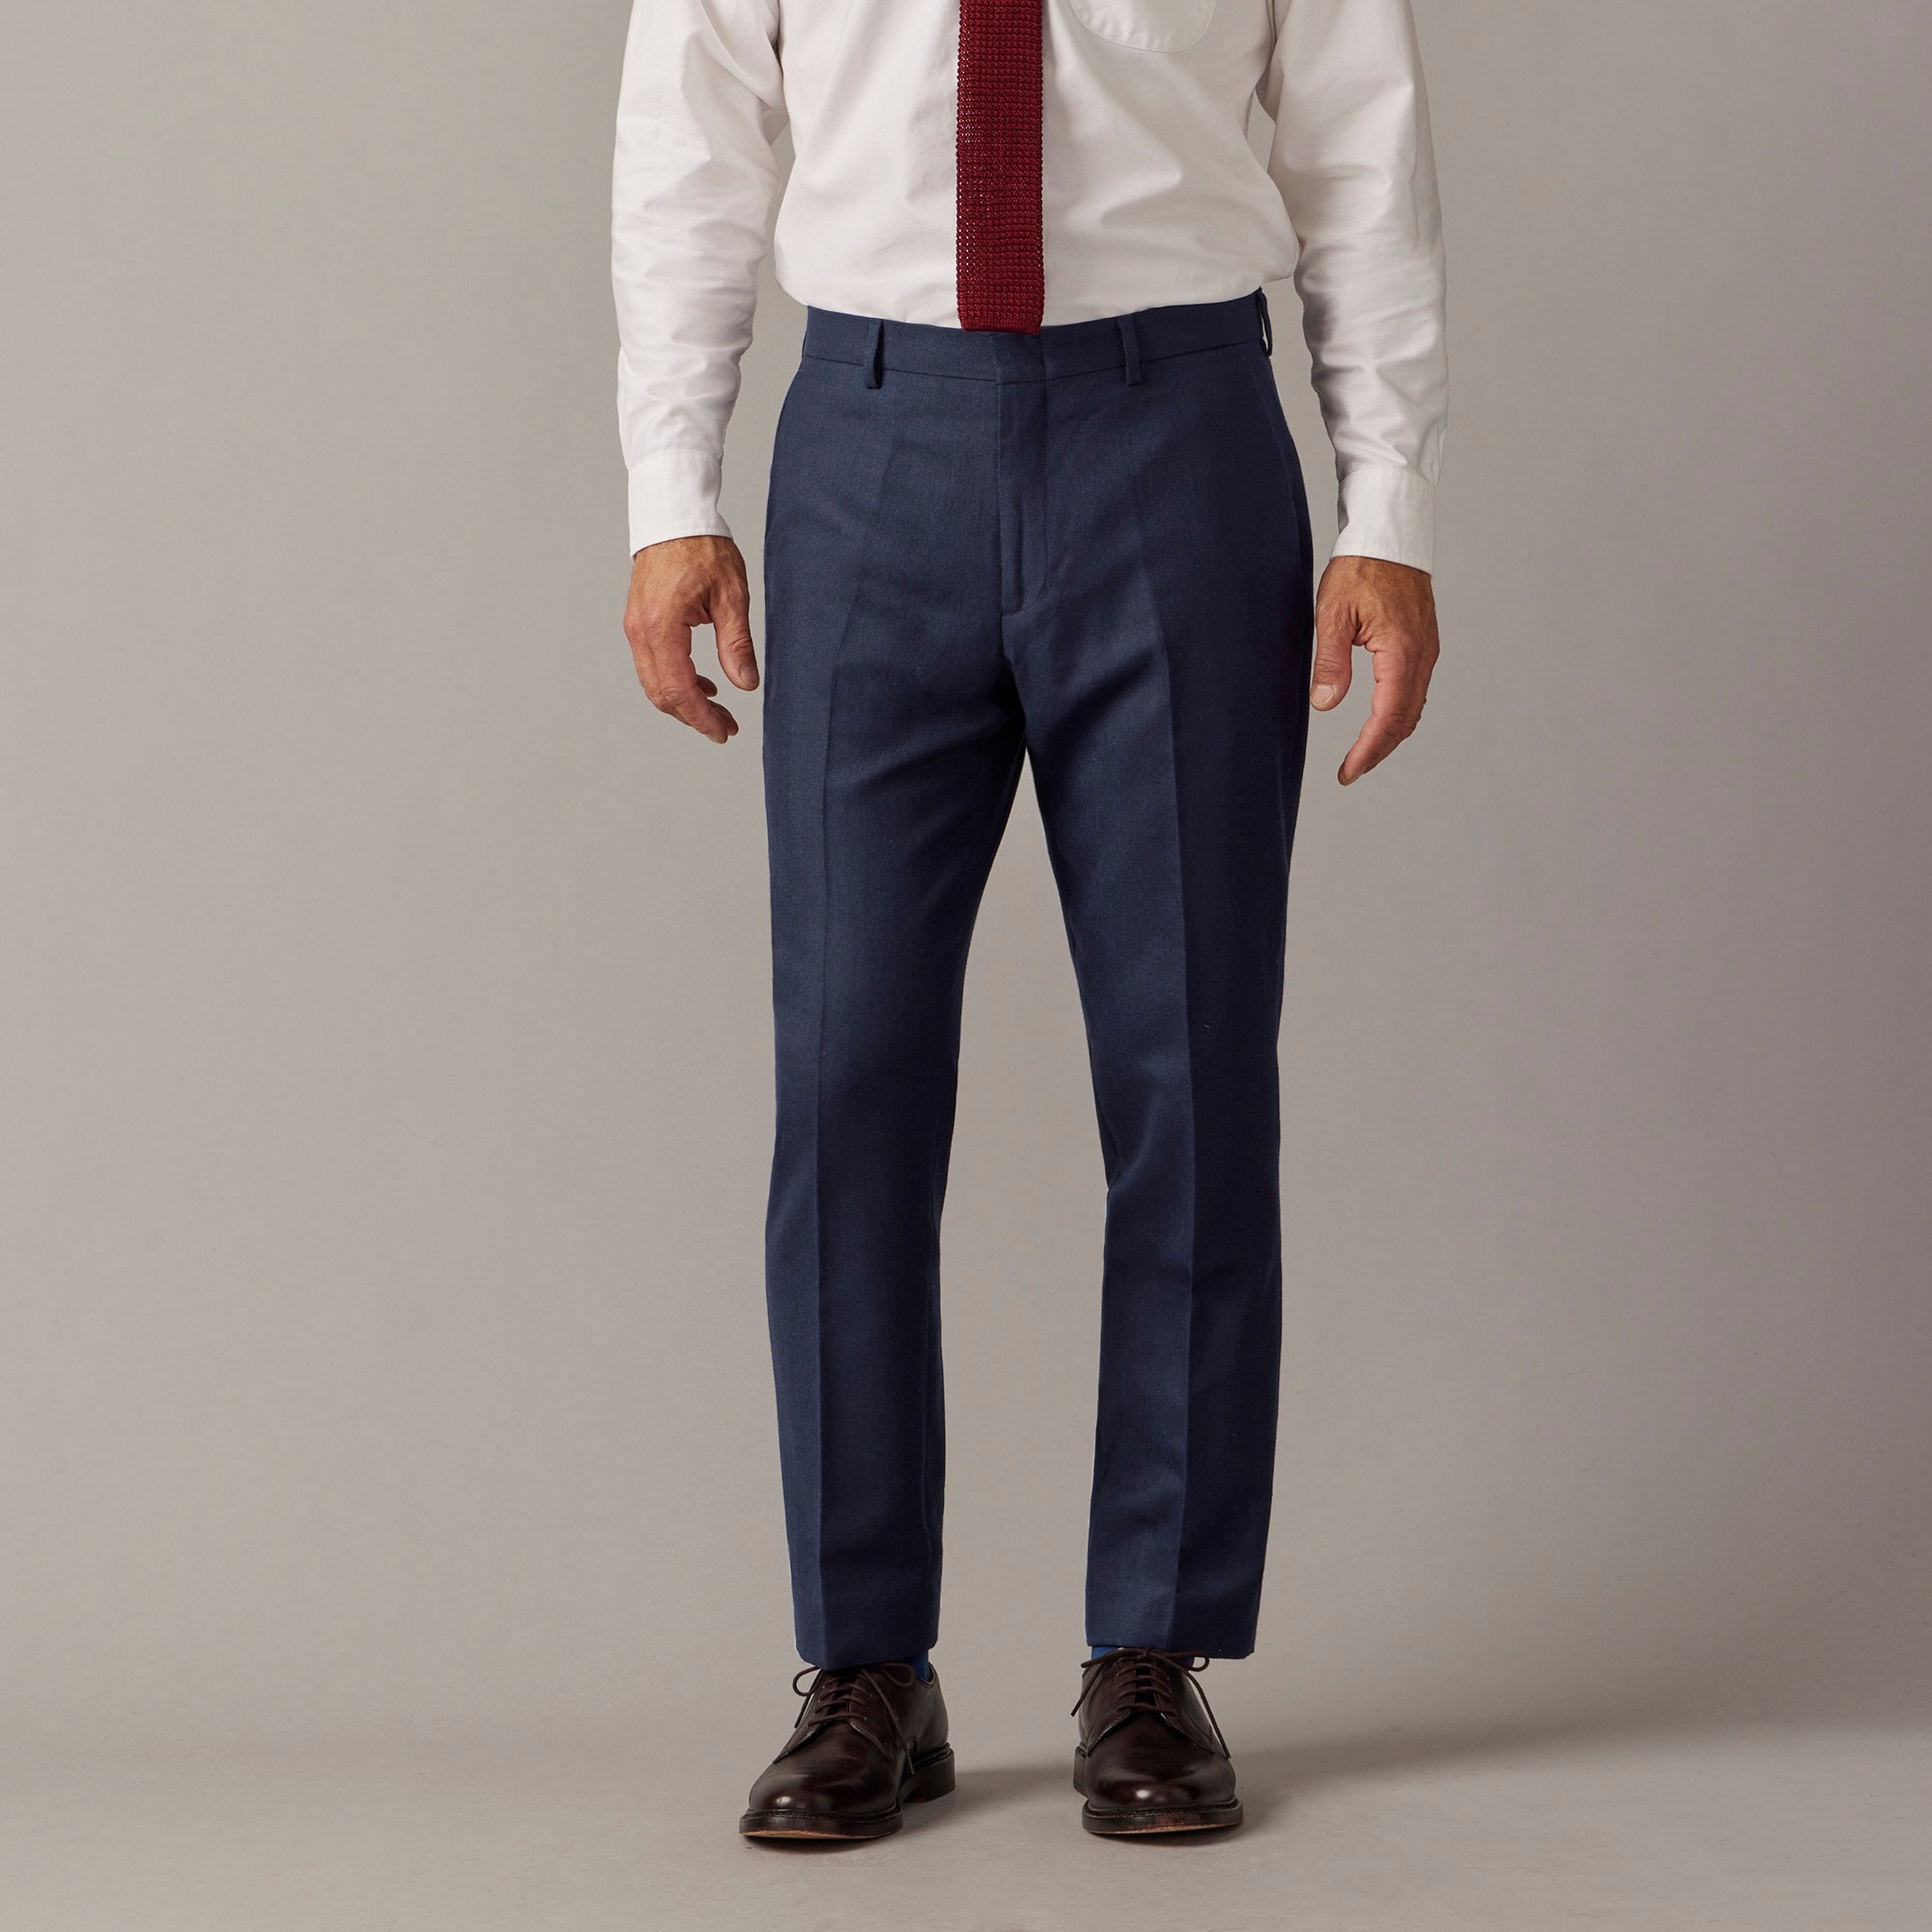 Jcrew Ludlow Slim-fit suit pant in English cotton-wool blend